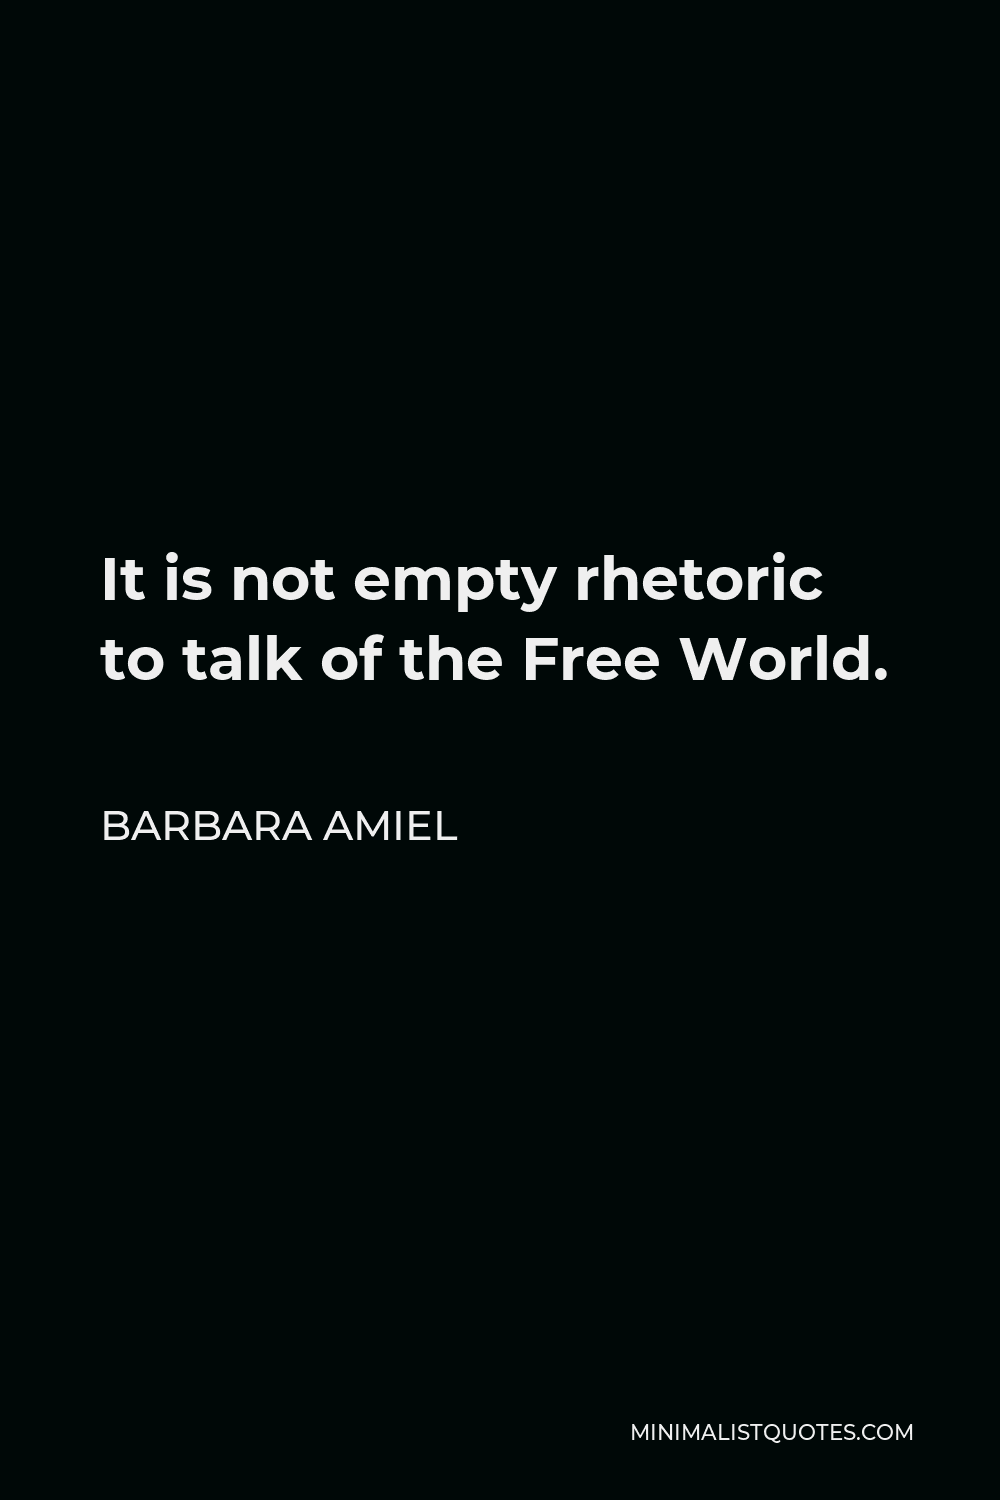 Barbara Amiel Quote - It is not empty rhetoric to talk of the Free World.